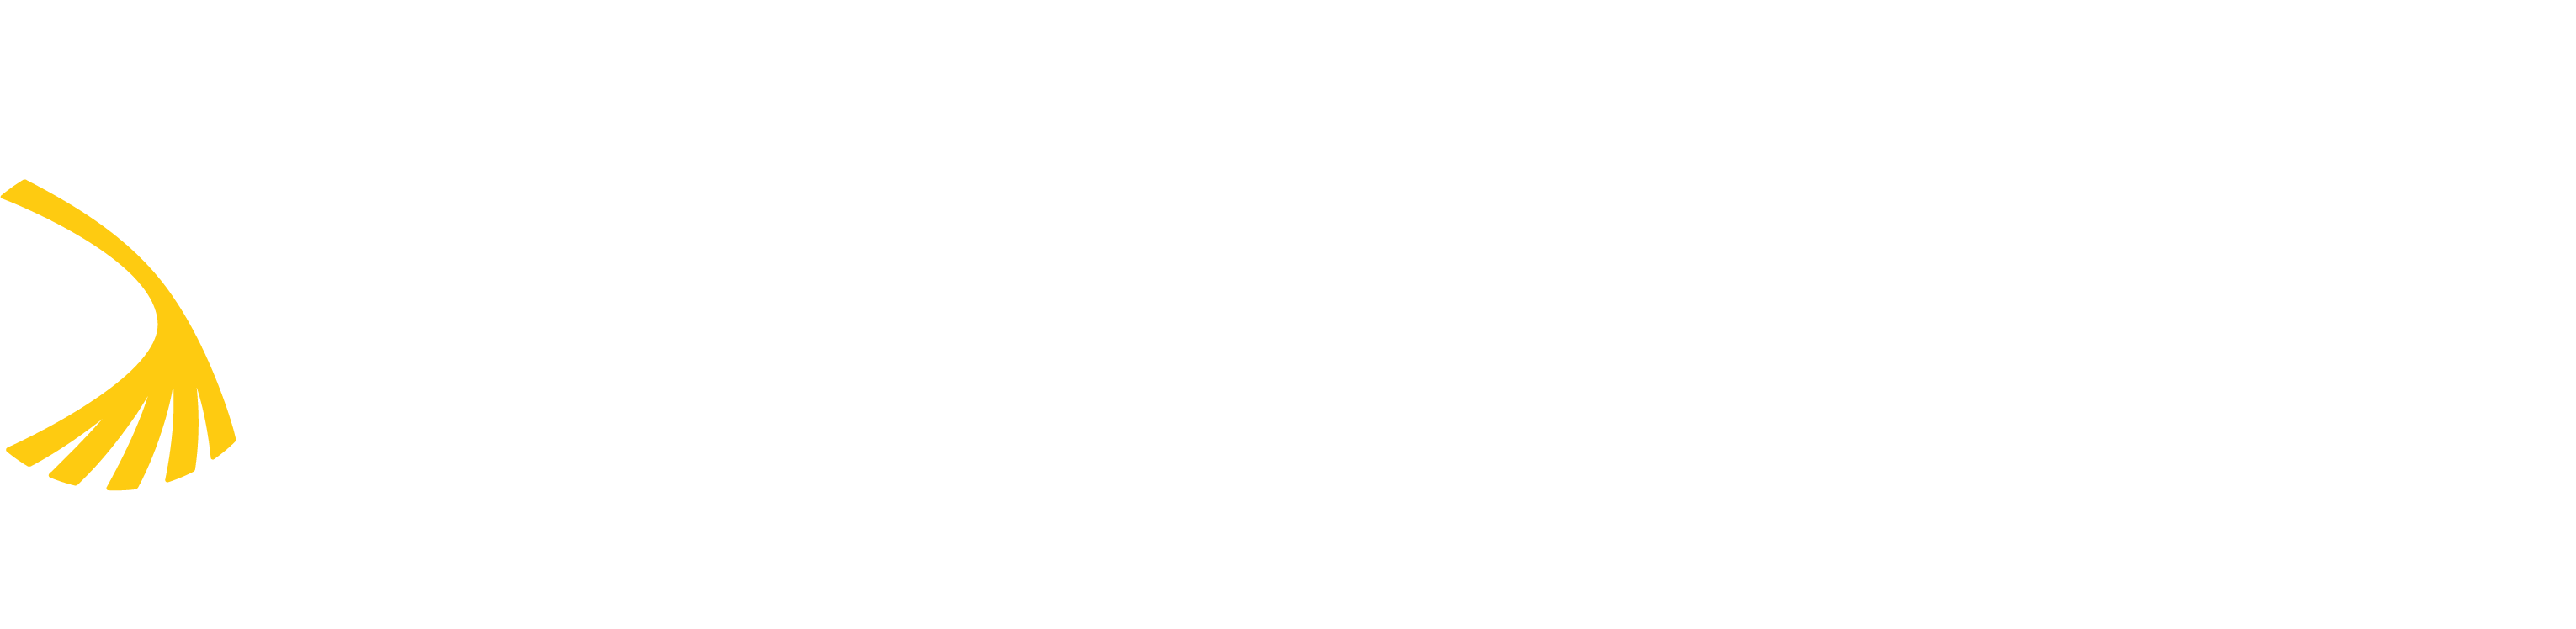 Engineering technology corp logo